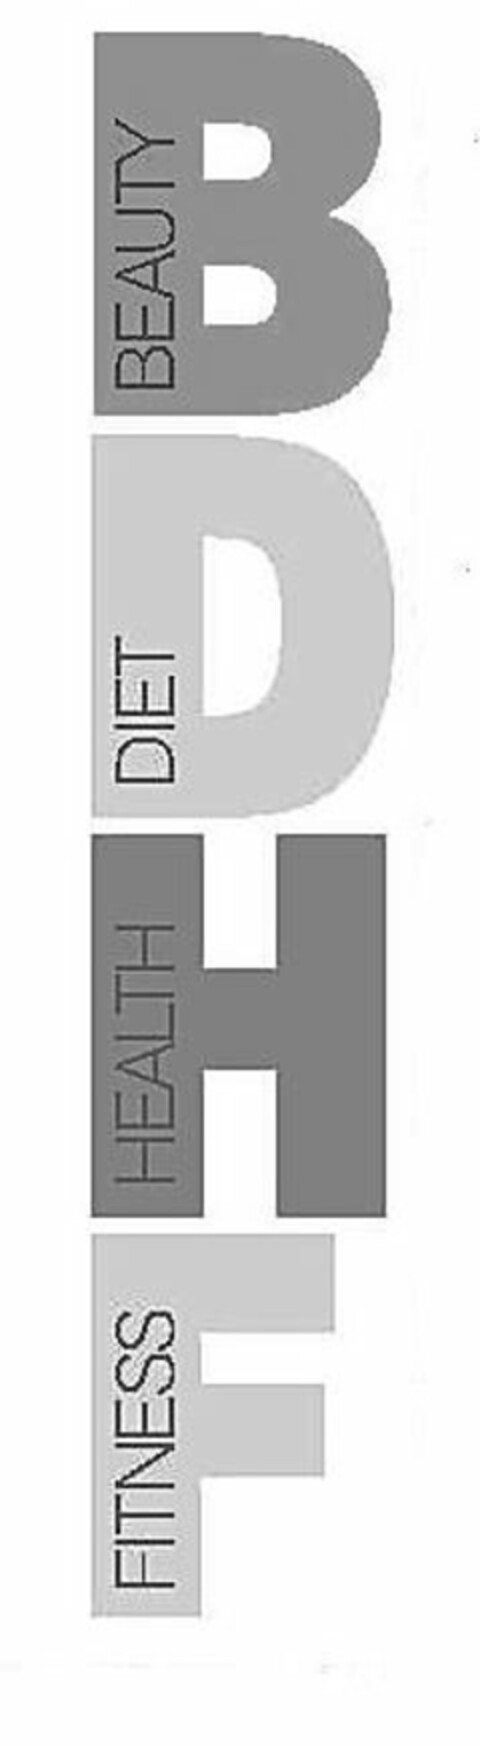 B BEAUTY D DIET H HEALTH F FITNESS Logo (USPTO, 22.01.2015)